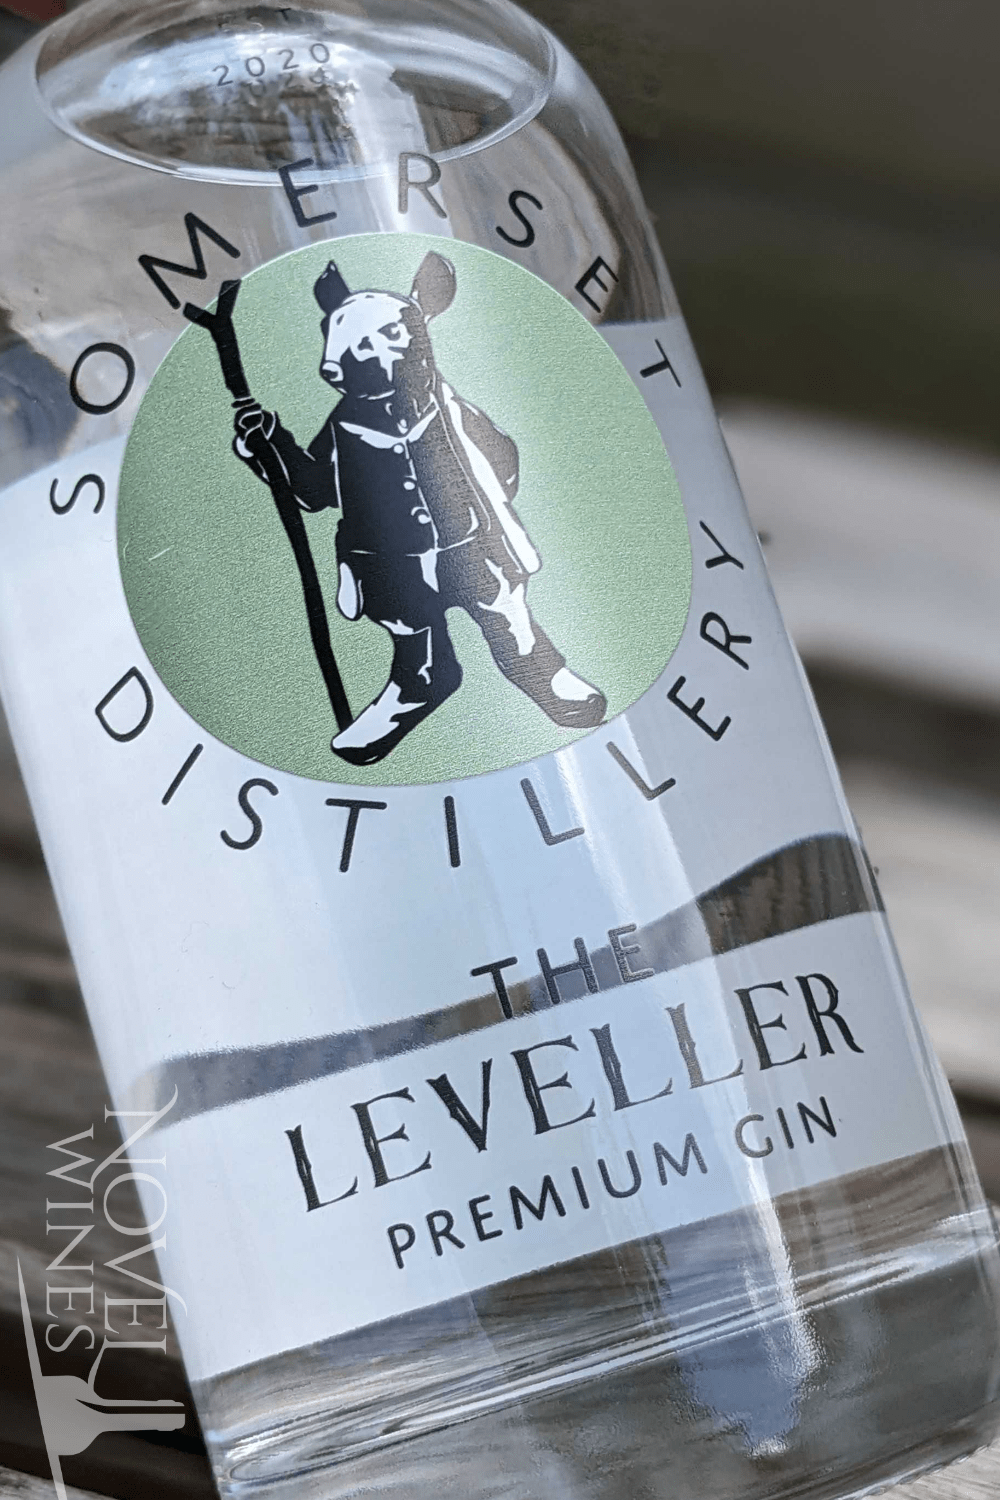 Somerset Distillery Gin Somerset Distillery The Leveller 43.0% abv, England